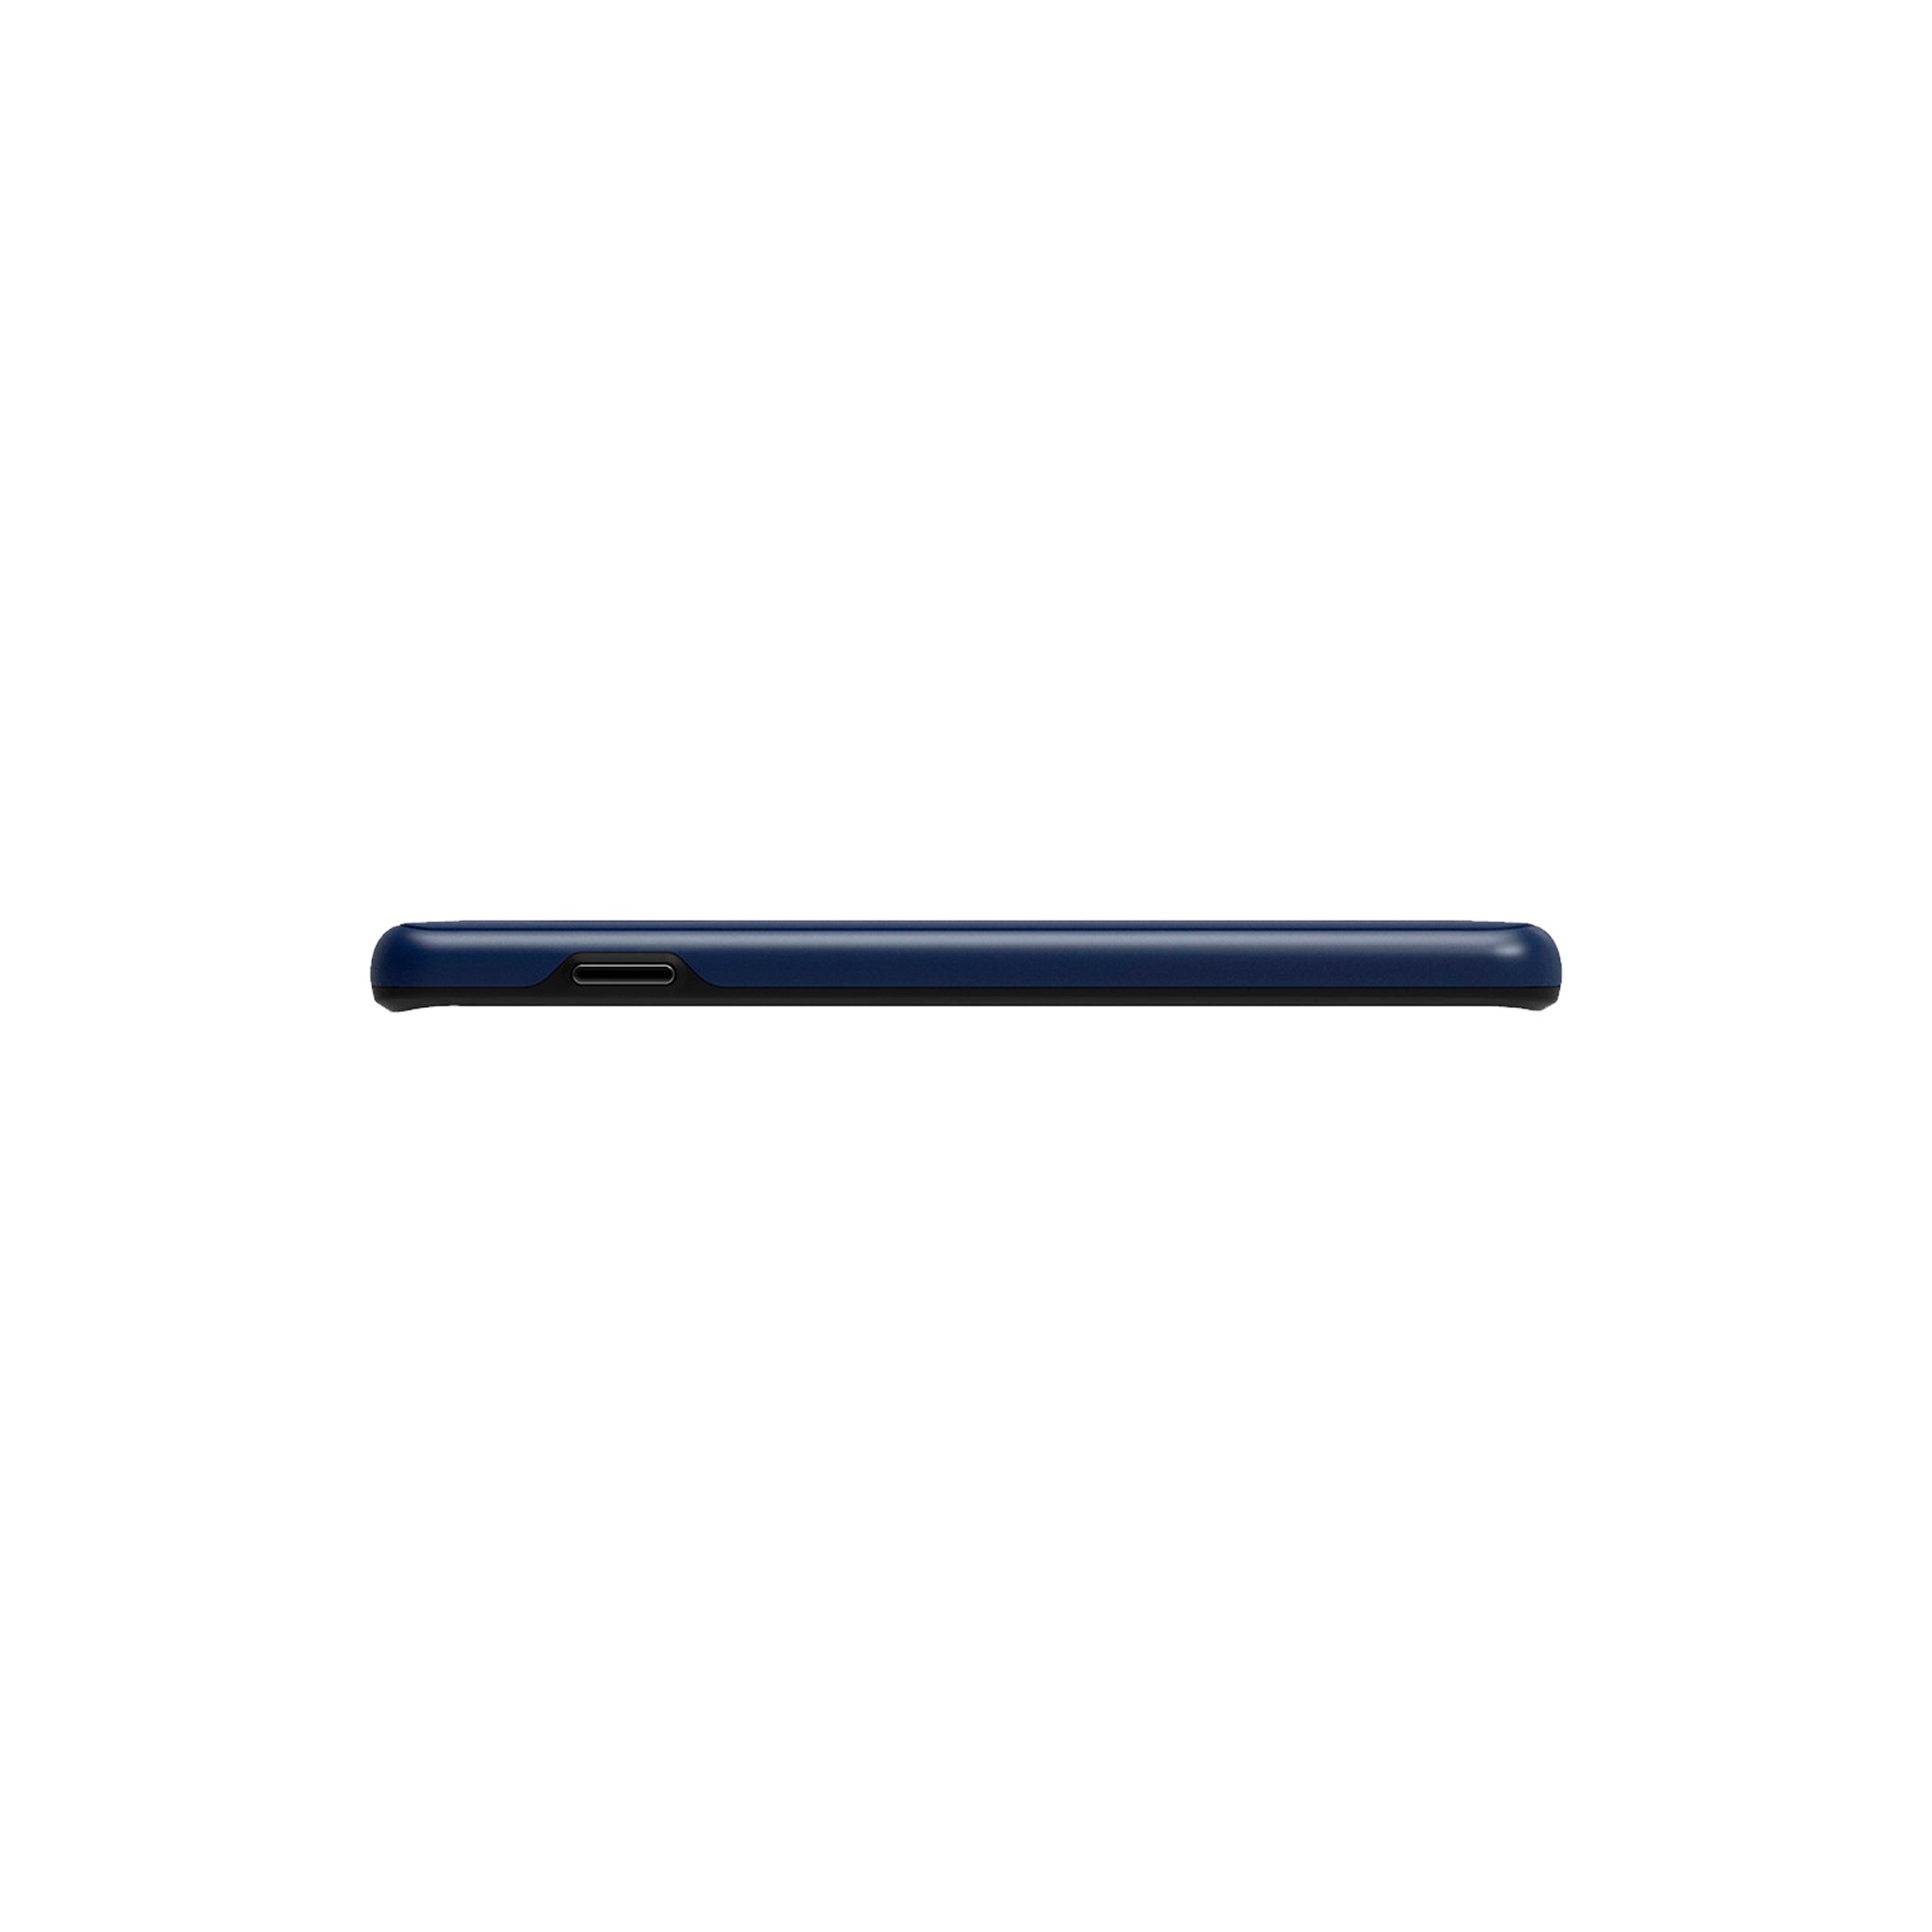 Nimbus9 - Cirrus 2 Case For Samsung Galaxy S10 - Midnight Blue